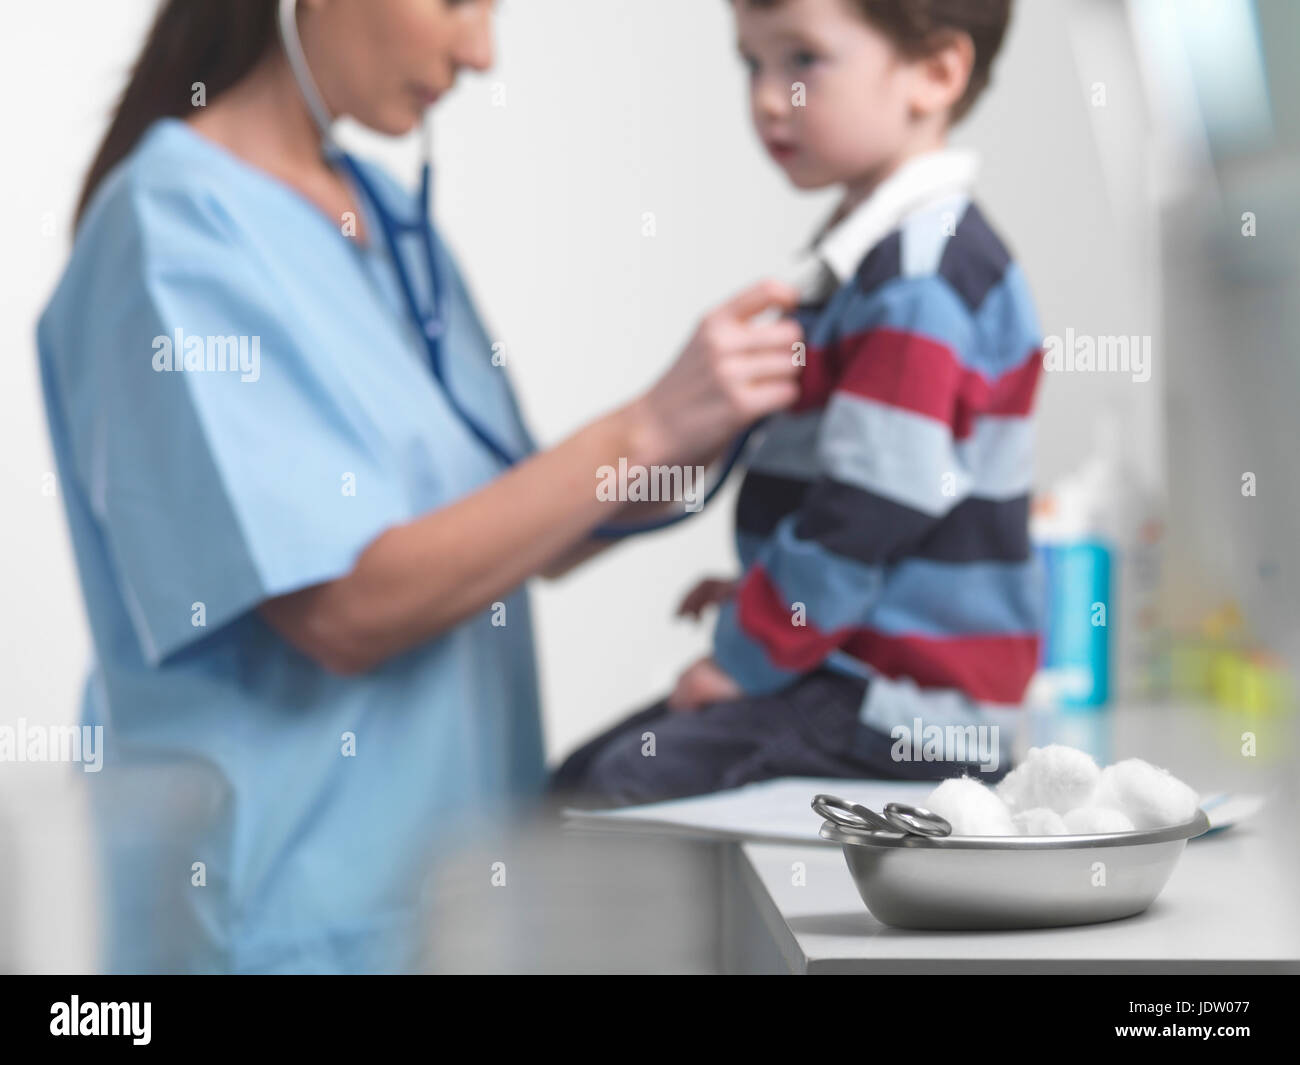 Nurse examining boy in doctors office Stock Photo